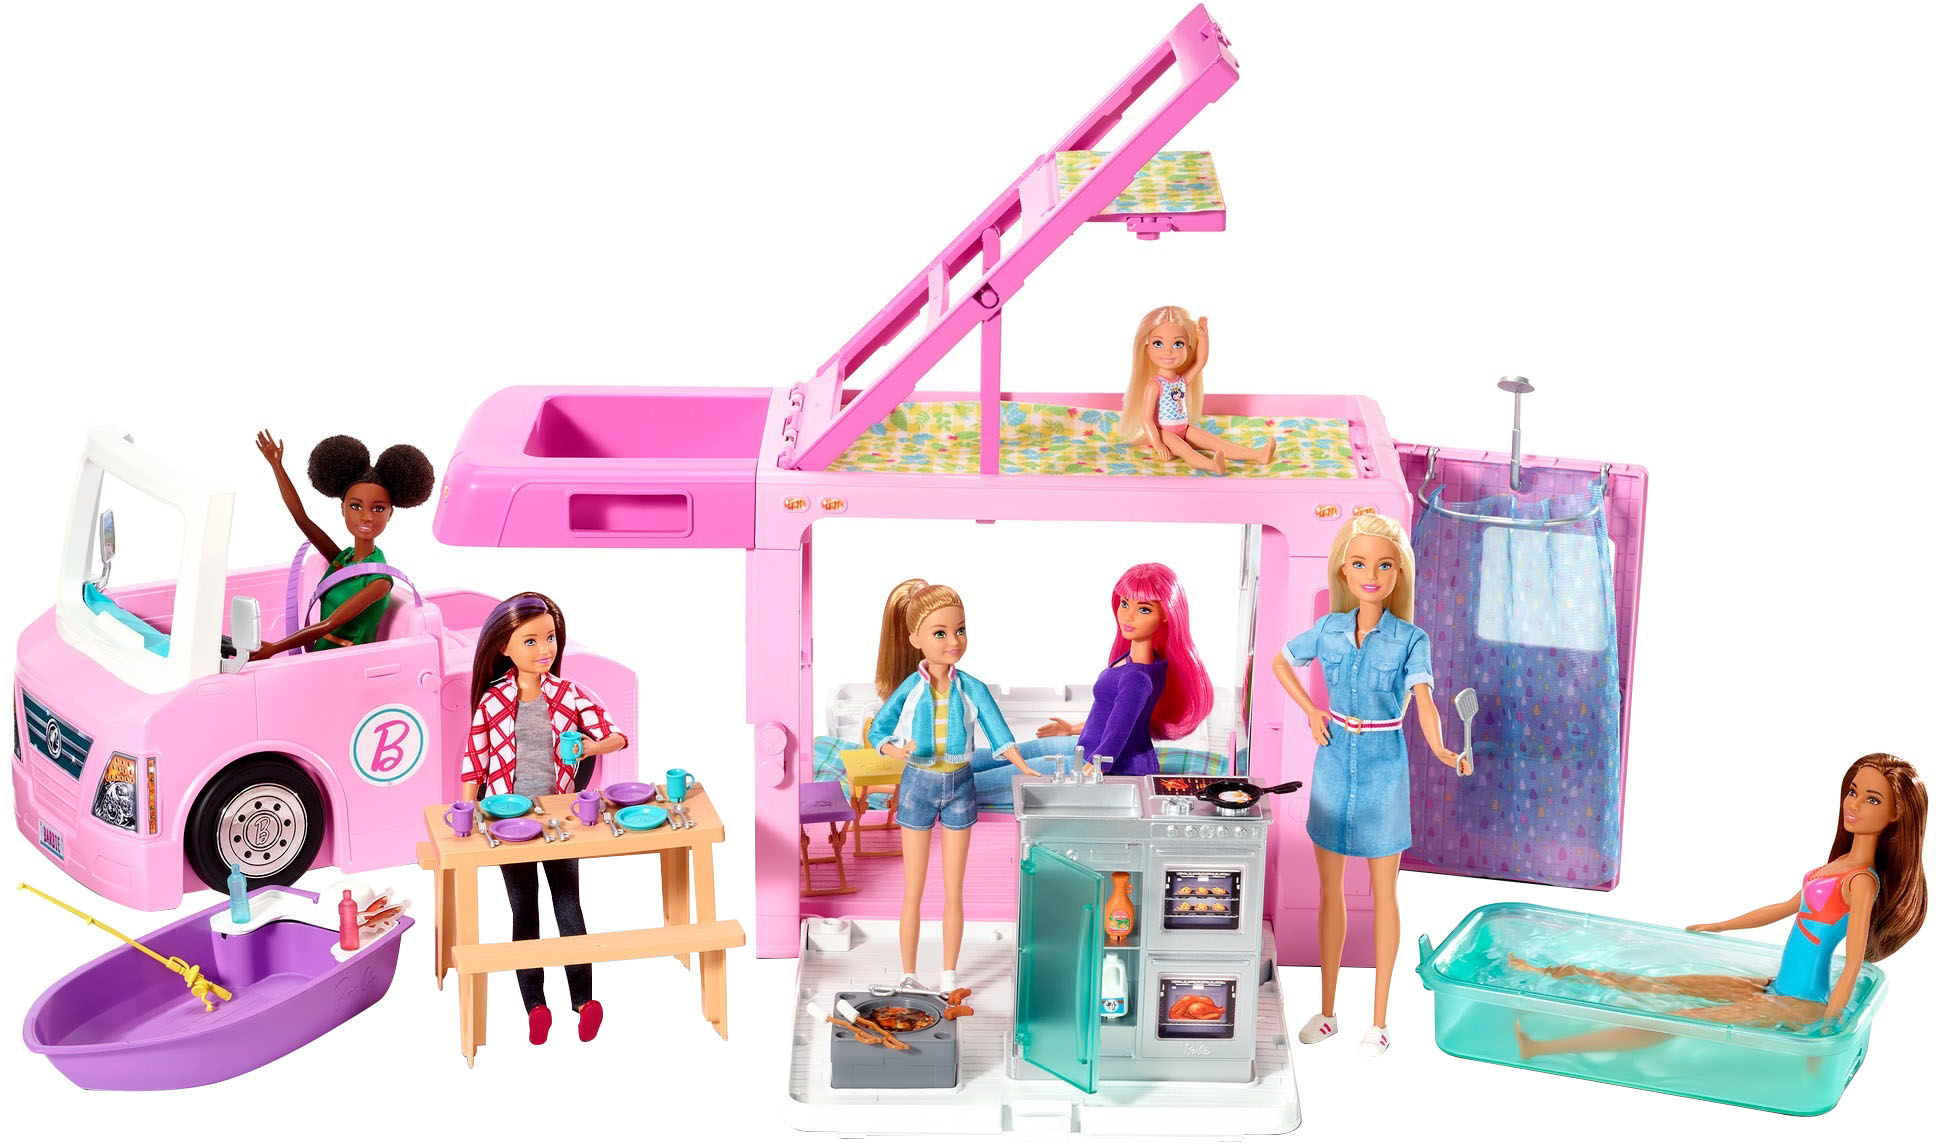 Best Buy: Mega Construx Barbie Dream Camper Adventure HPN80